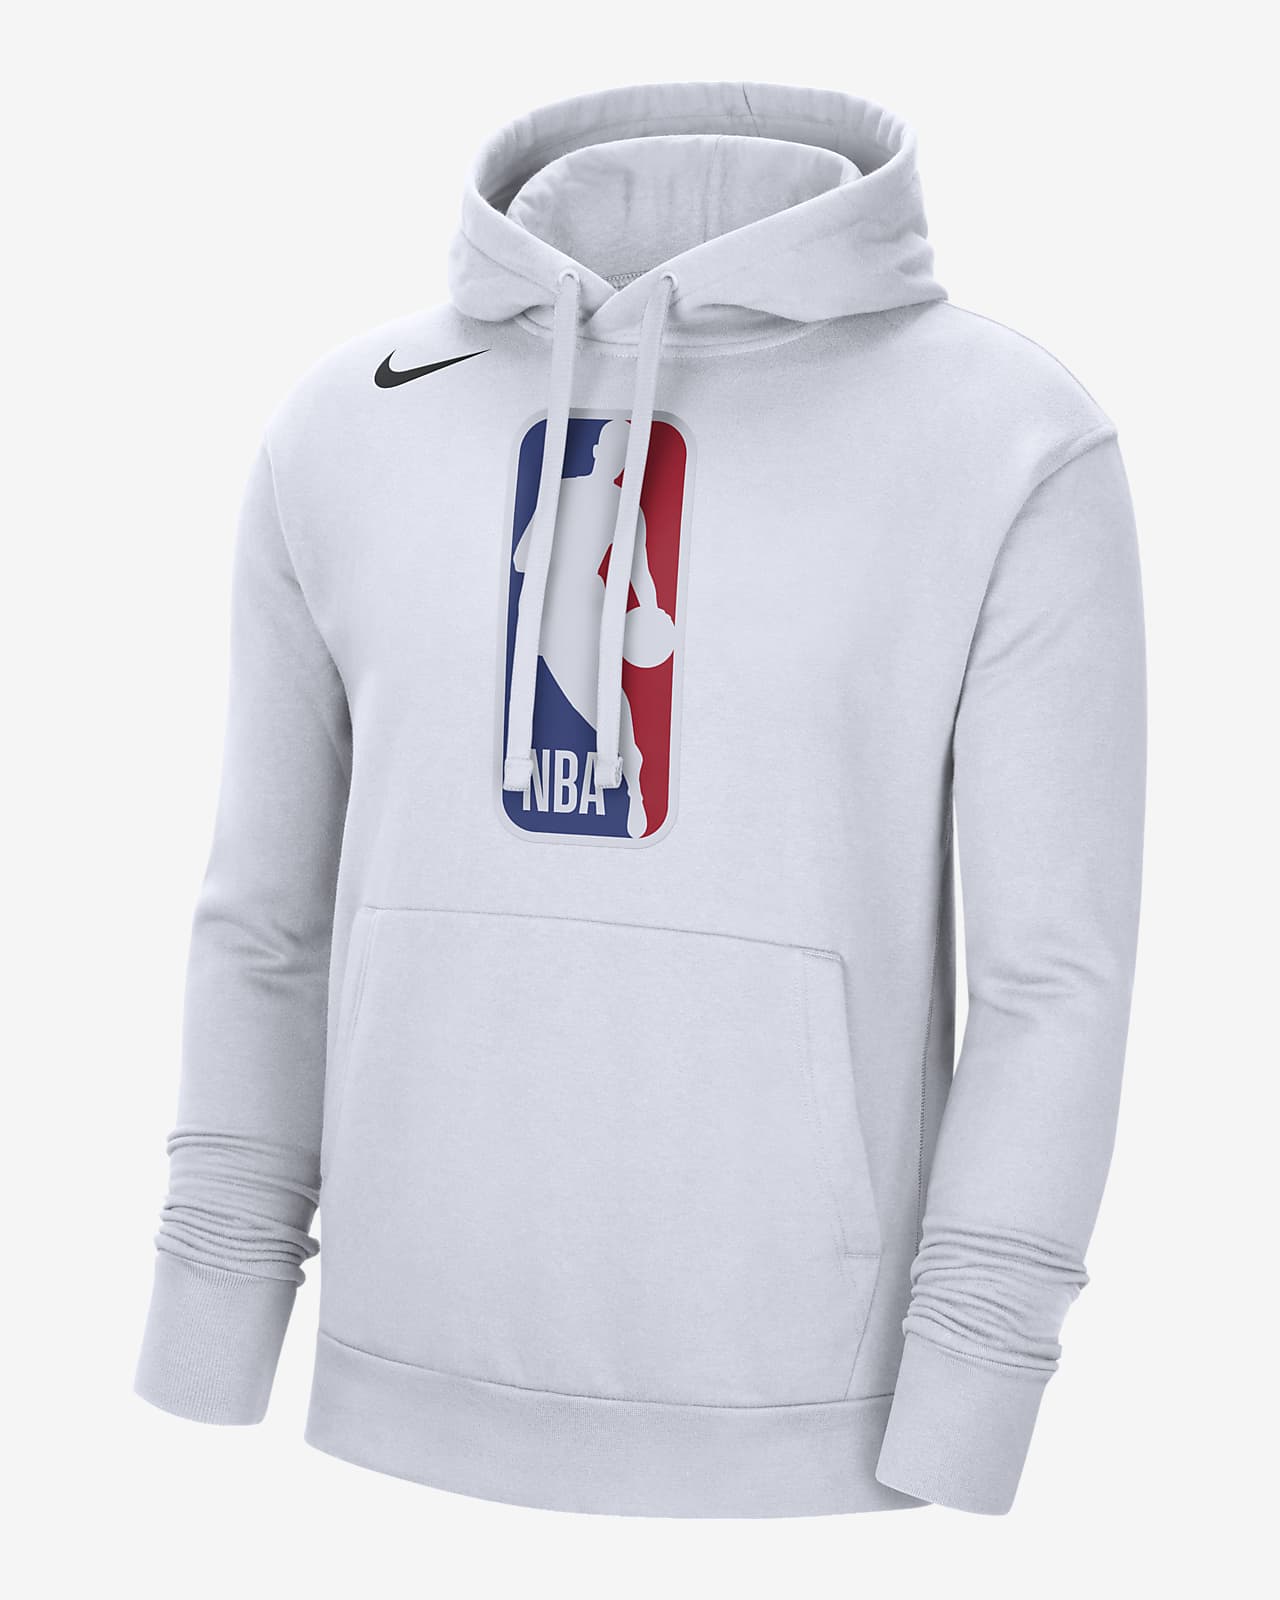 Team 31 Men's Nike NBA Fleece Pullover Hoodie